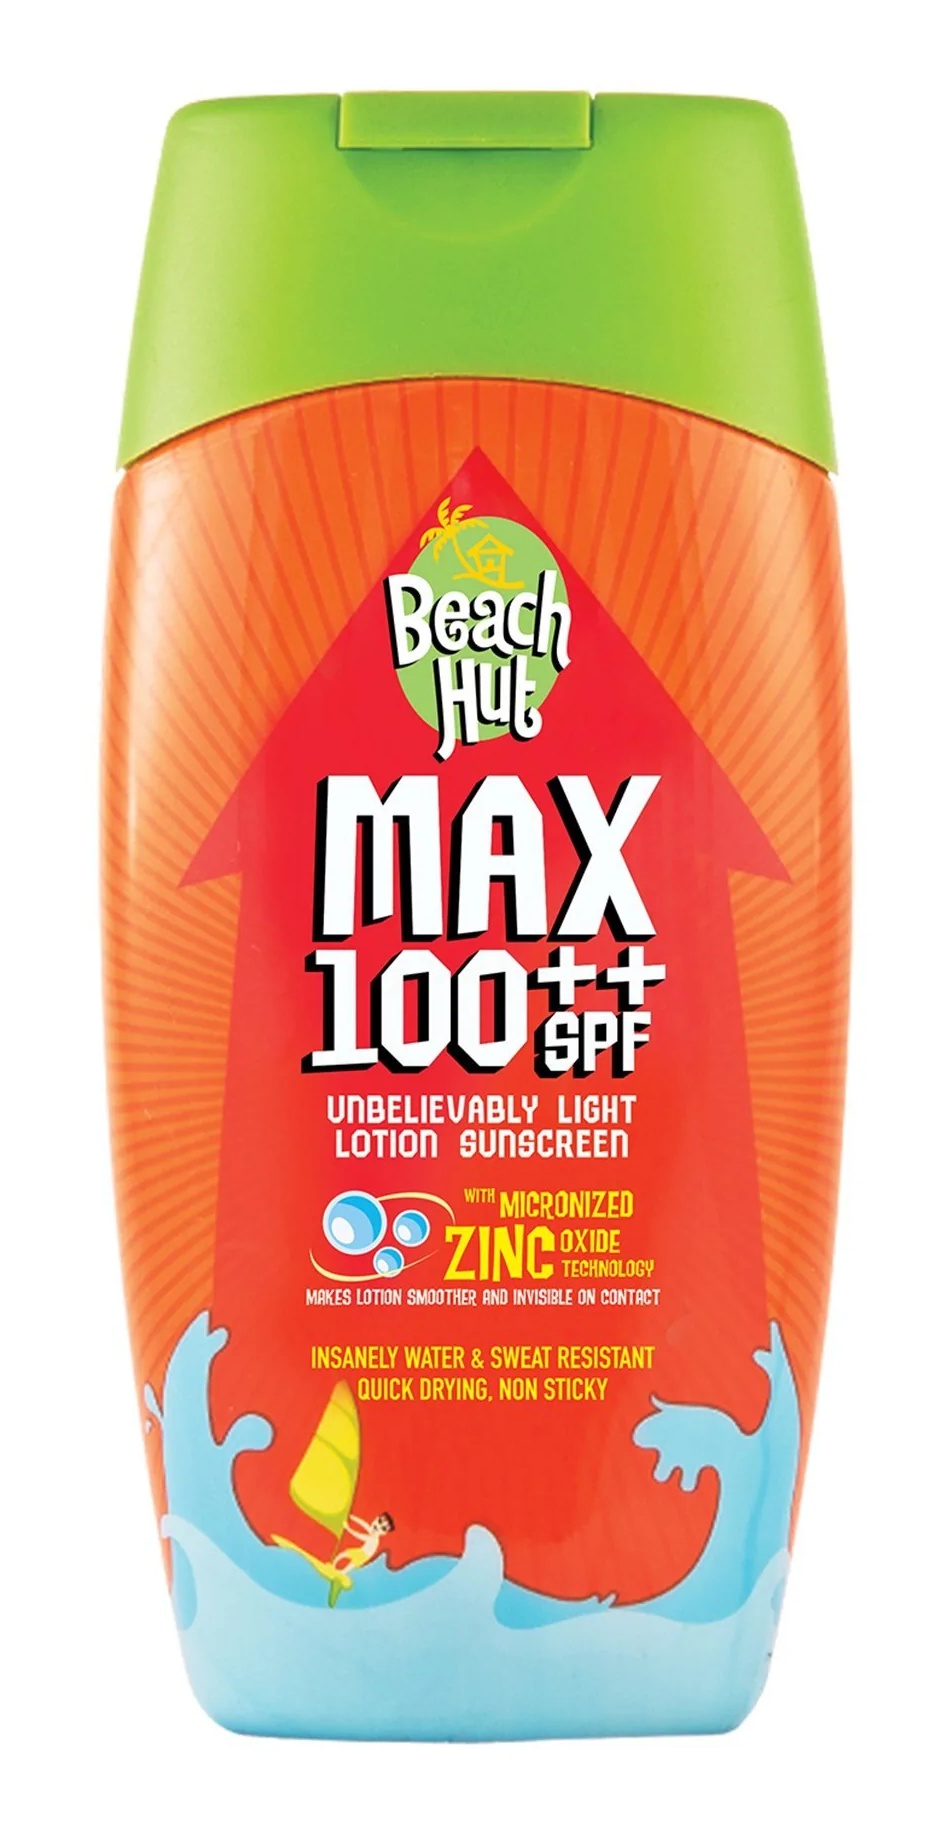 Beach Hut Max 100++ SPF Unbelievably Light Lotion Sunscreen